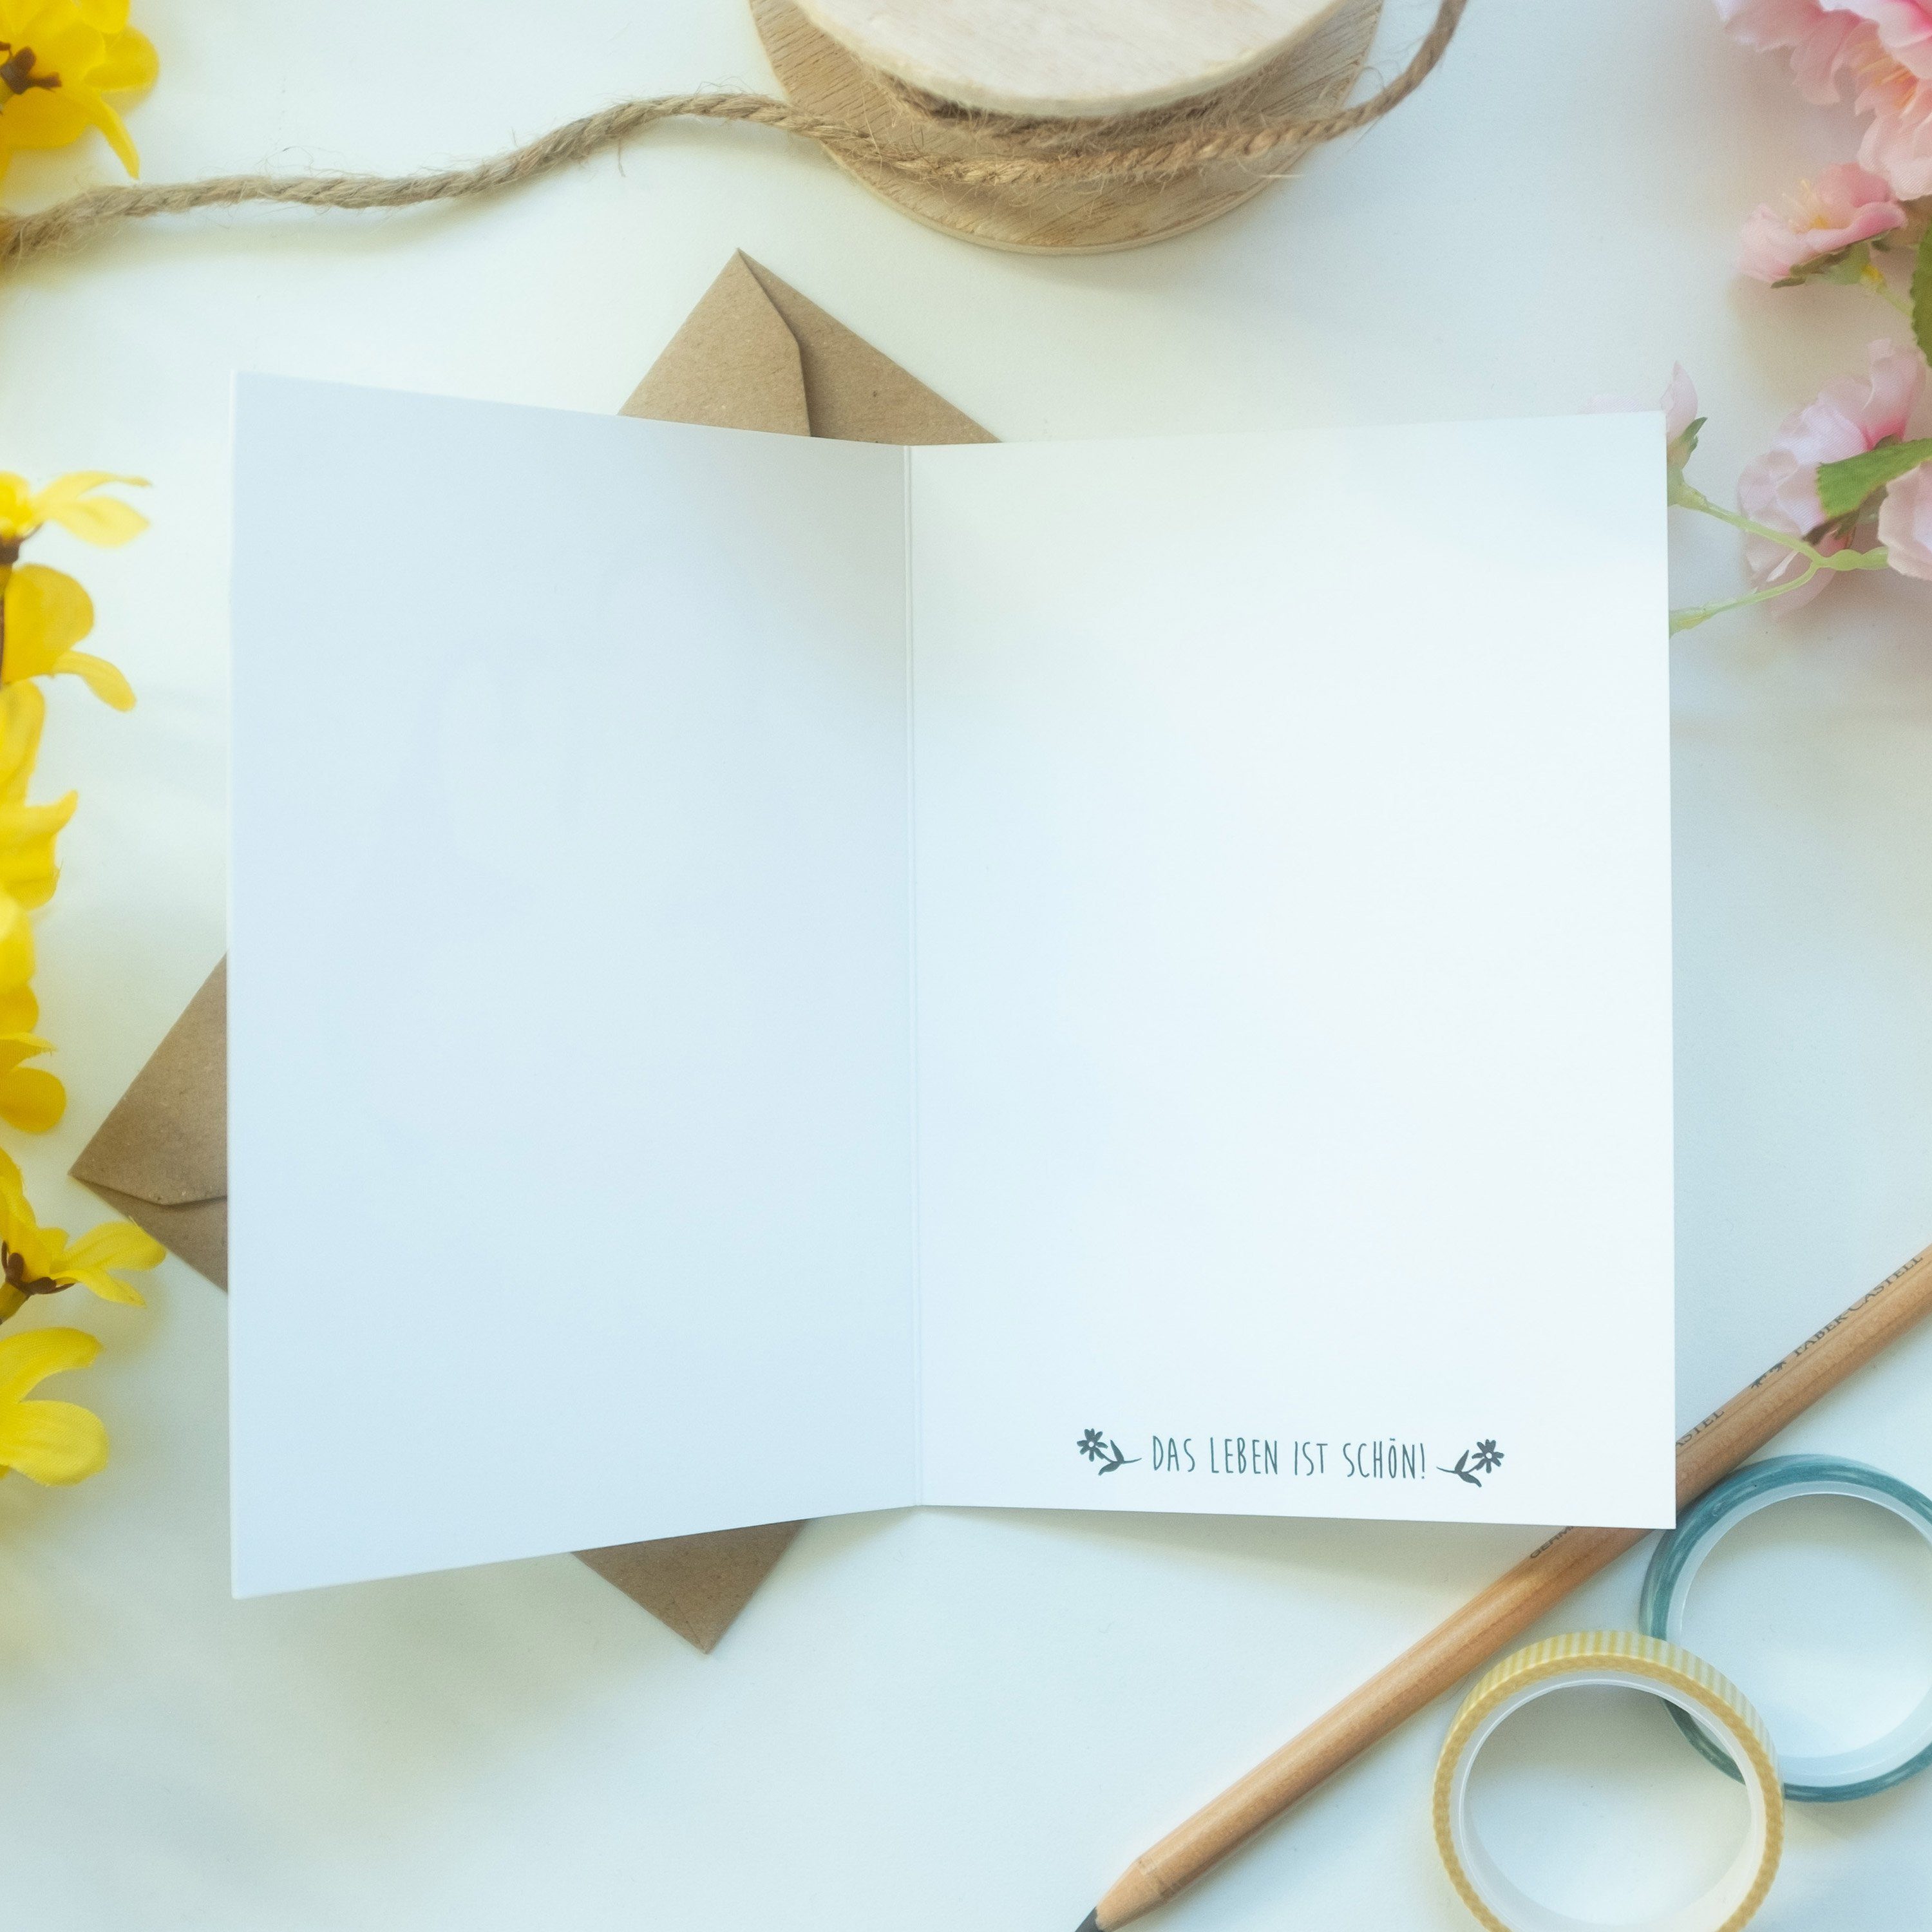 Mr. & Mrs. Panda Grußkarte aus - Geschenk, Geburtstagskarte Finanzcontroller Leidenschaft - Weiß